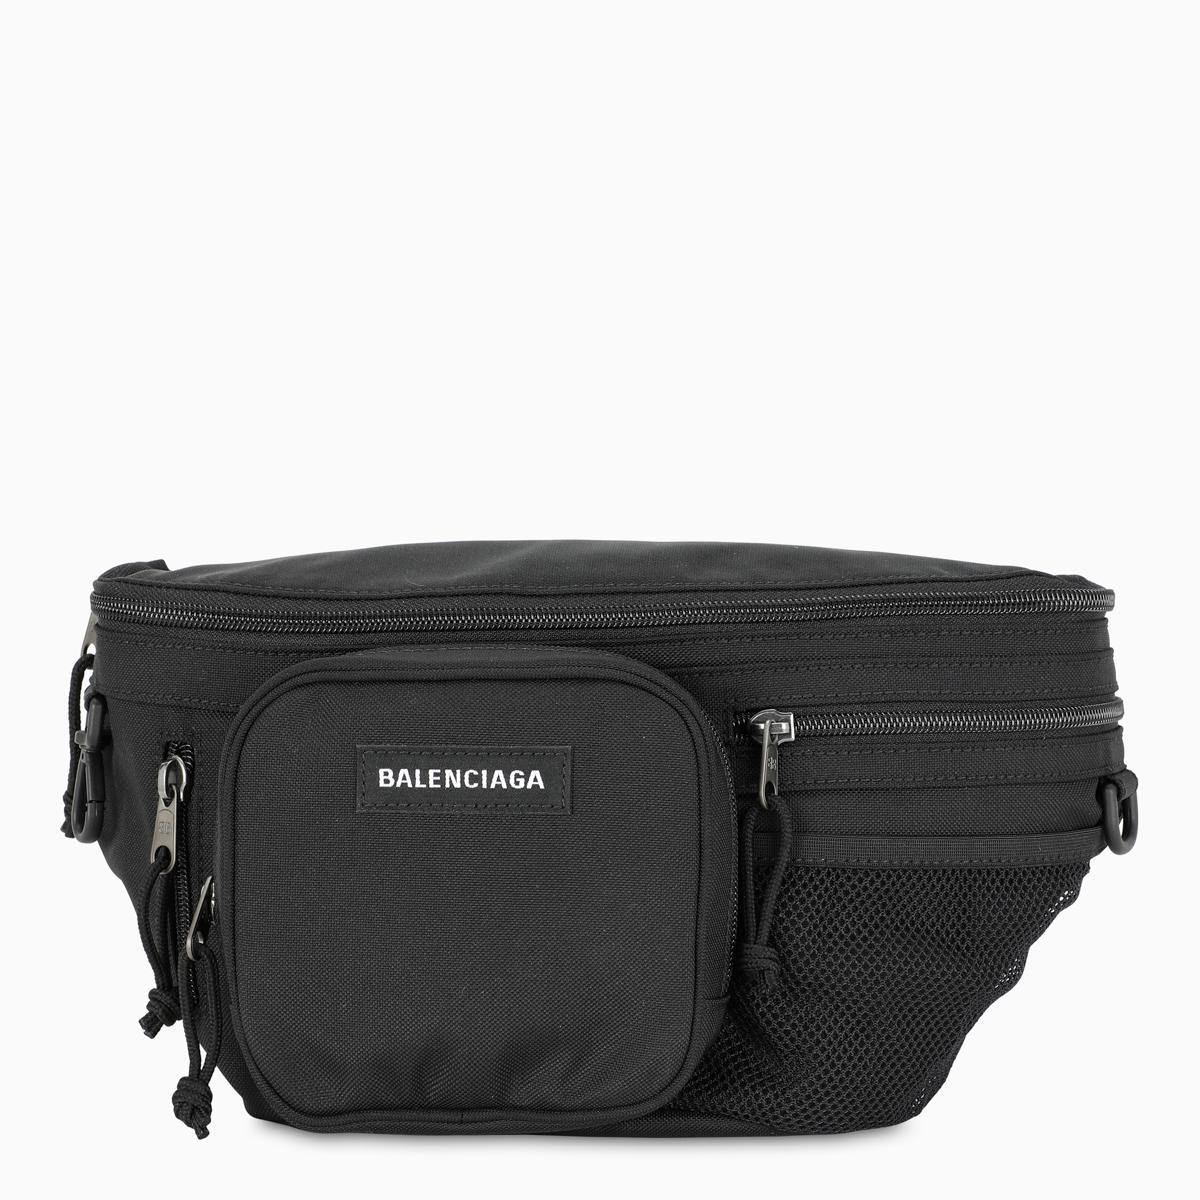 Balenciaga Explorer Multi-zip Belt Bag in Black for Men - Lyst